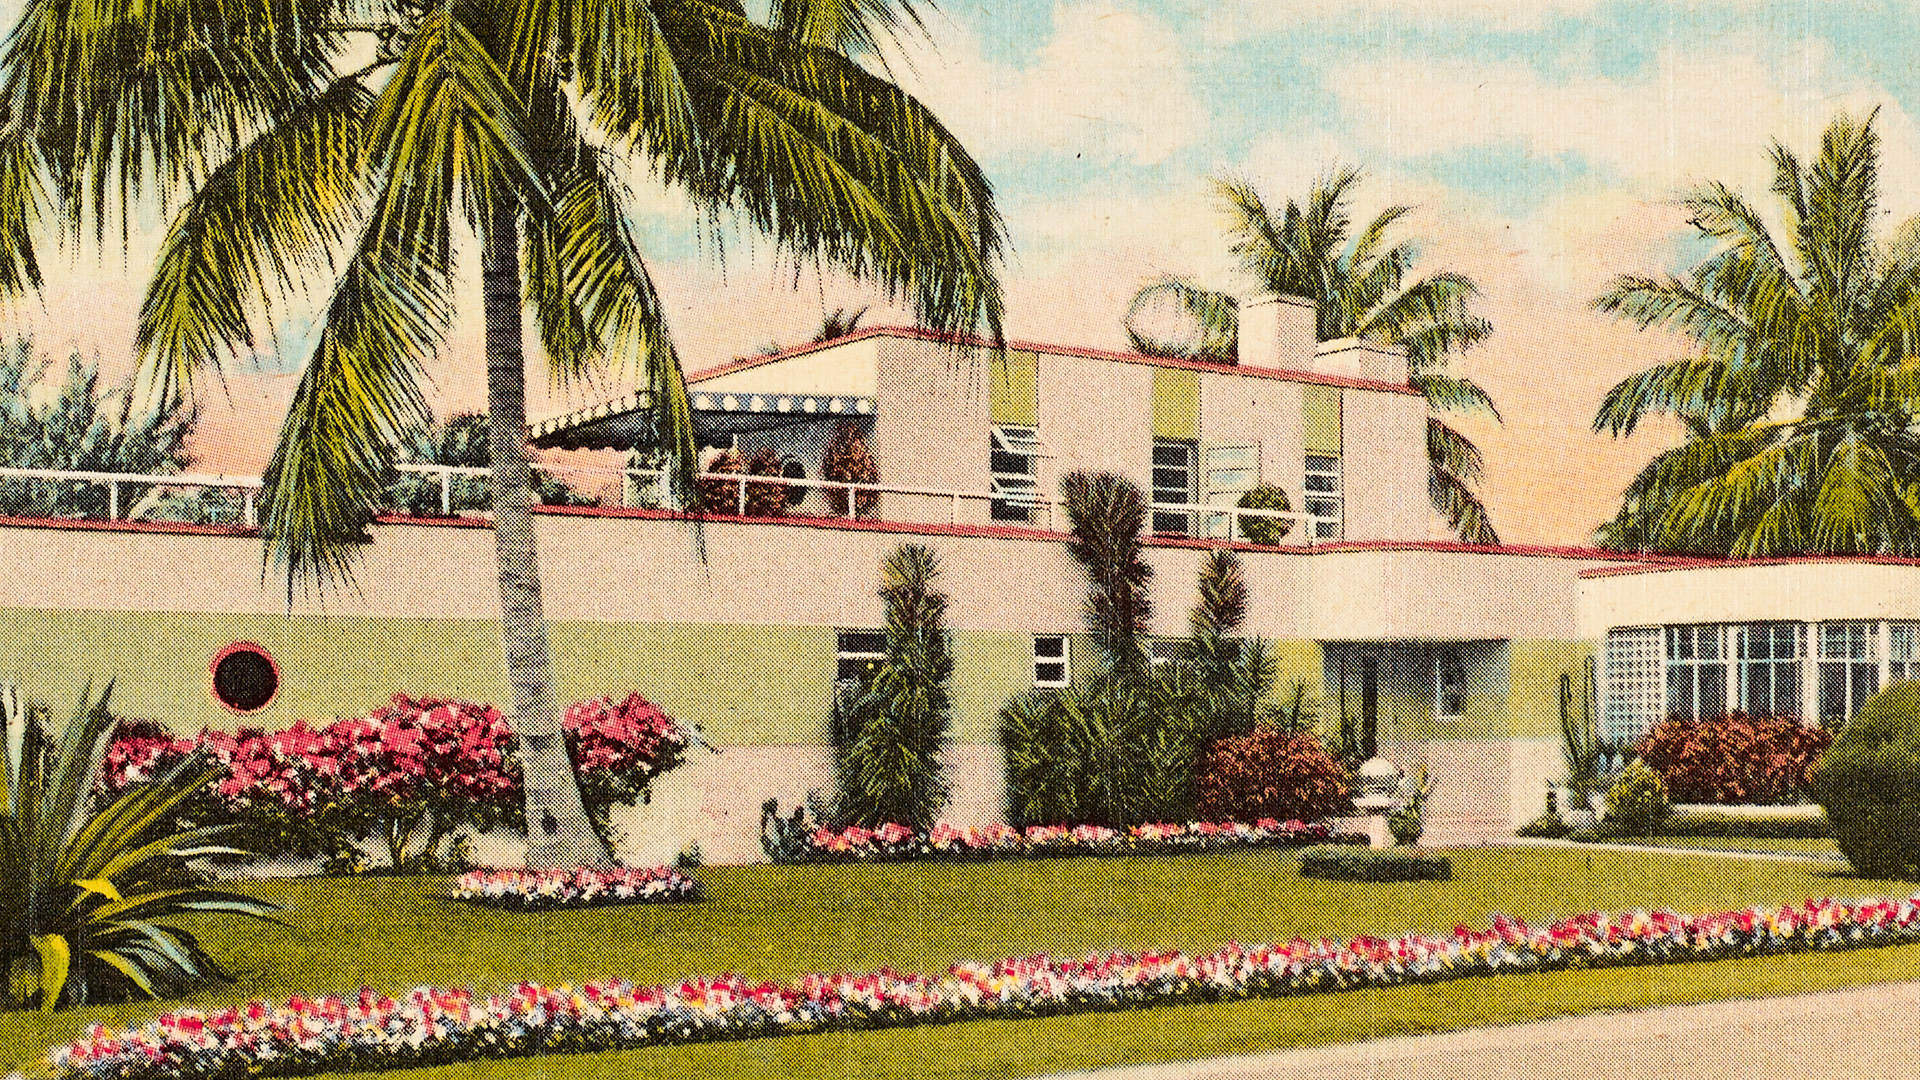 Postcard of a modernistic Miami Beach home